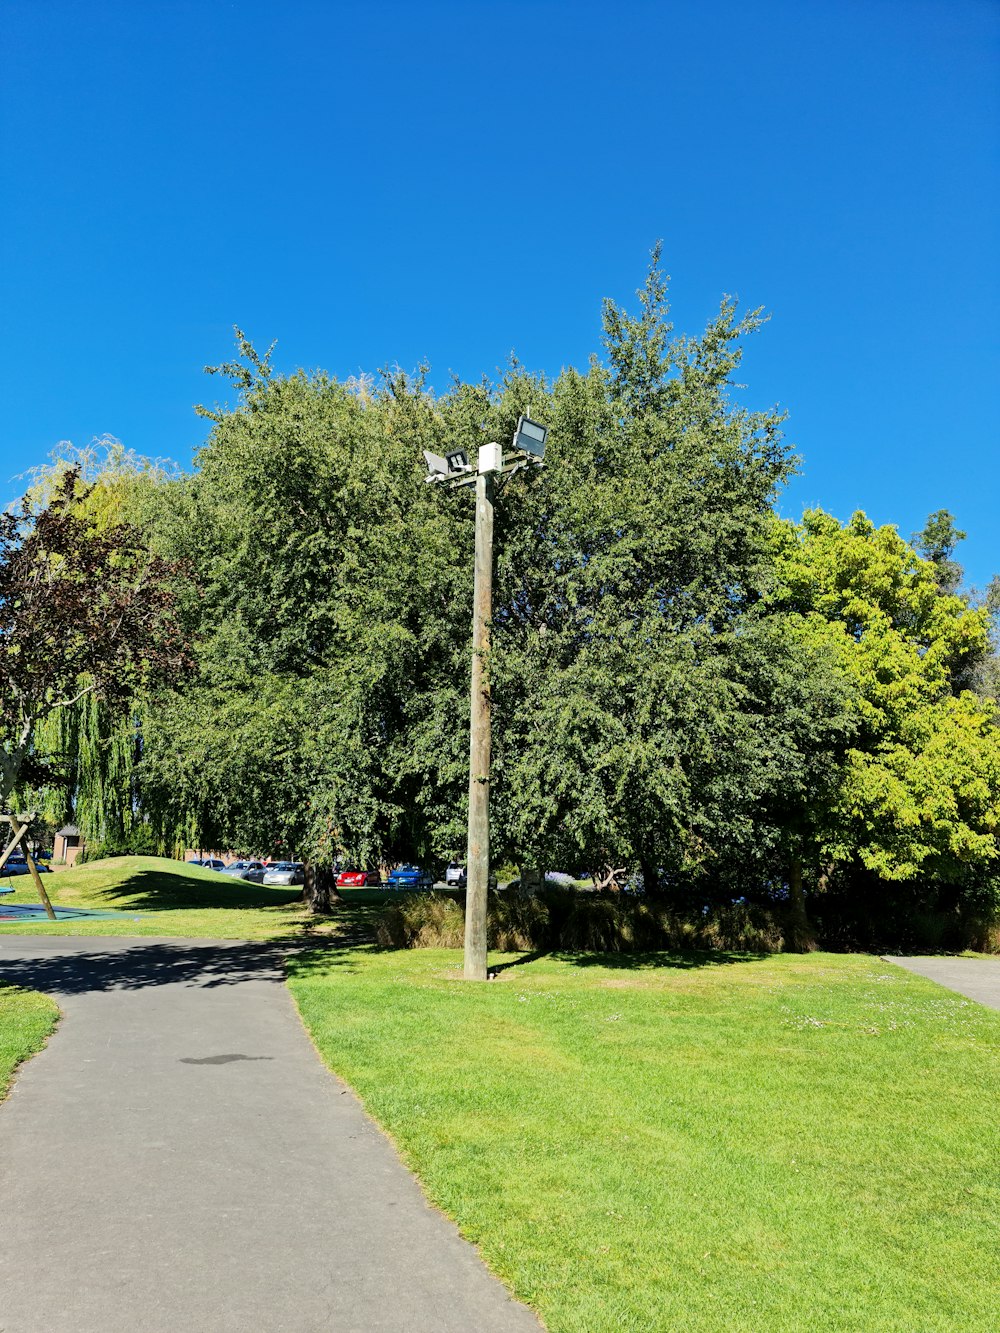 a street light sitting next to a lush green park